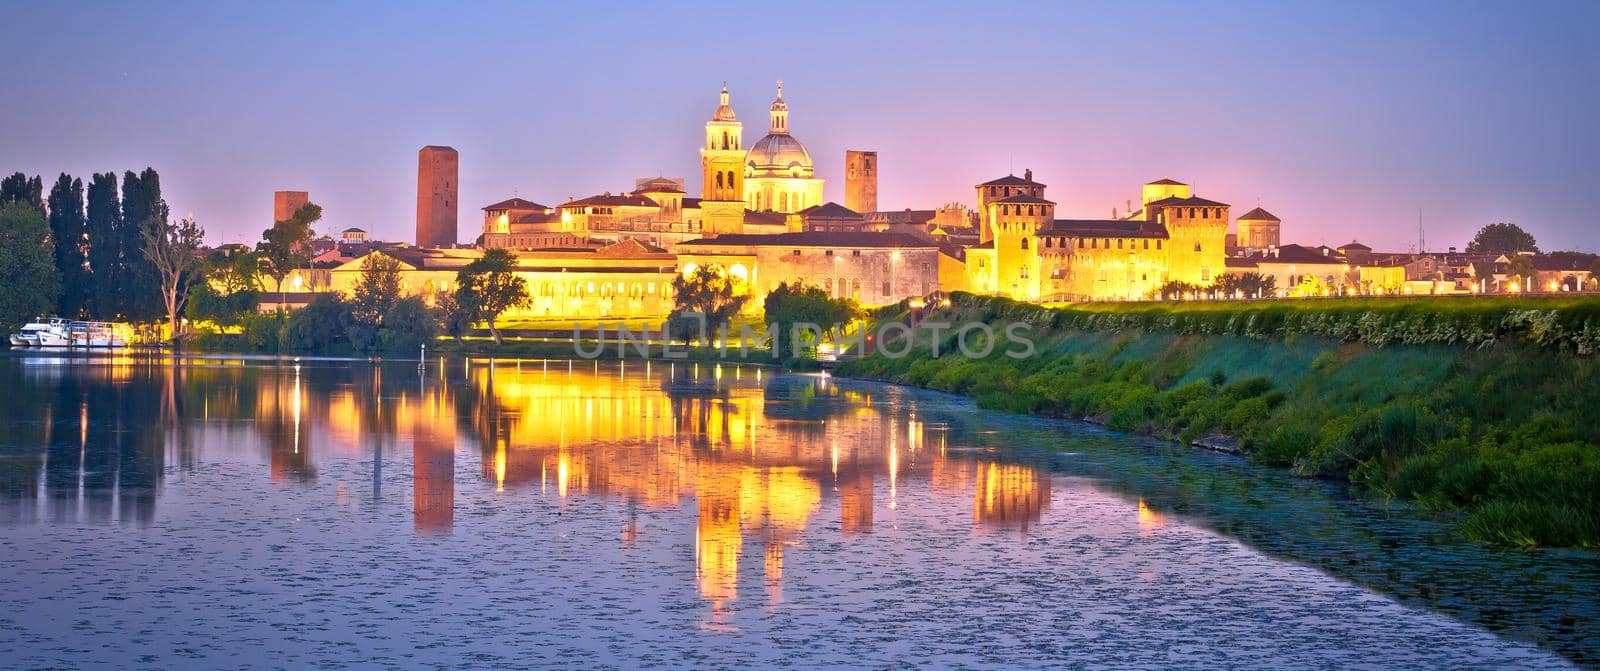 City of Mantova skyline lake reflections dawn view by xbrchx